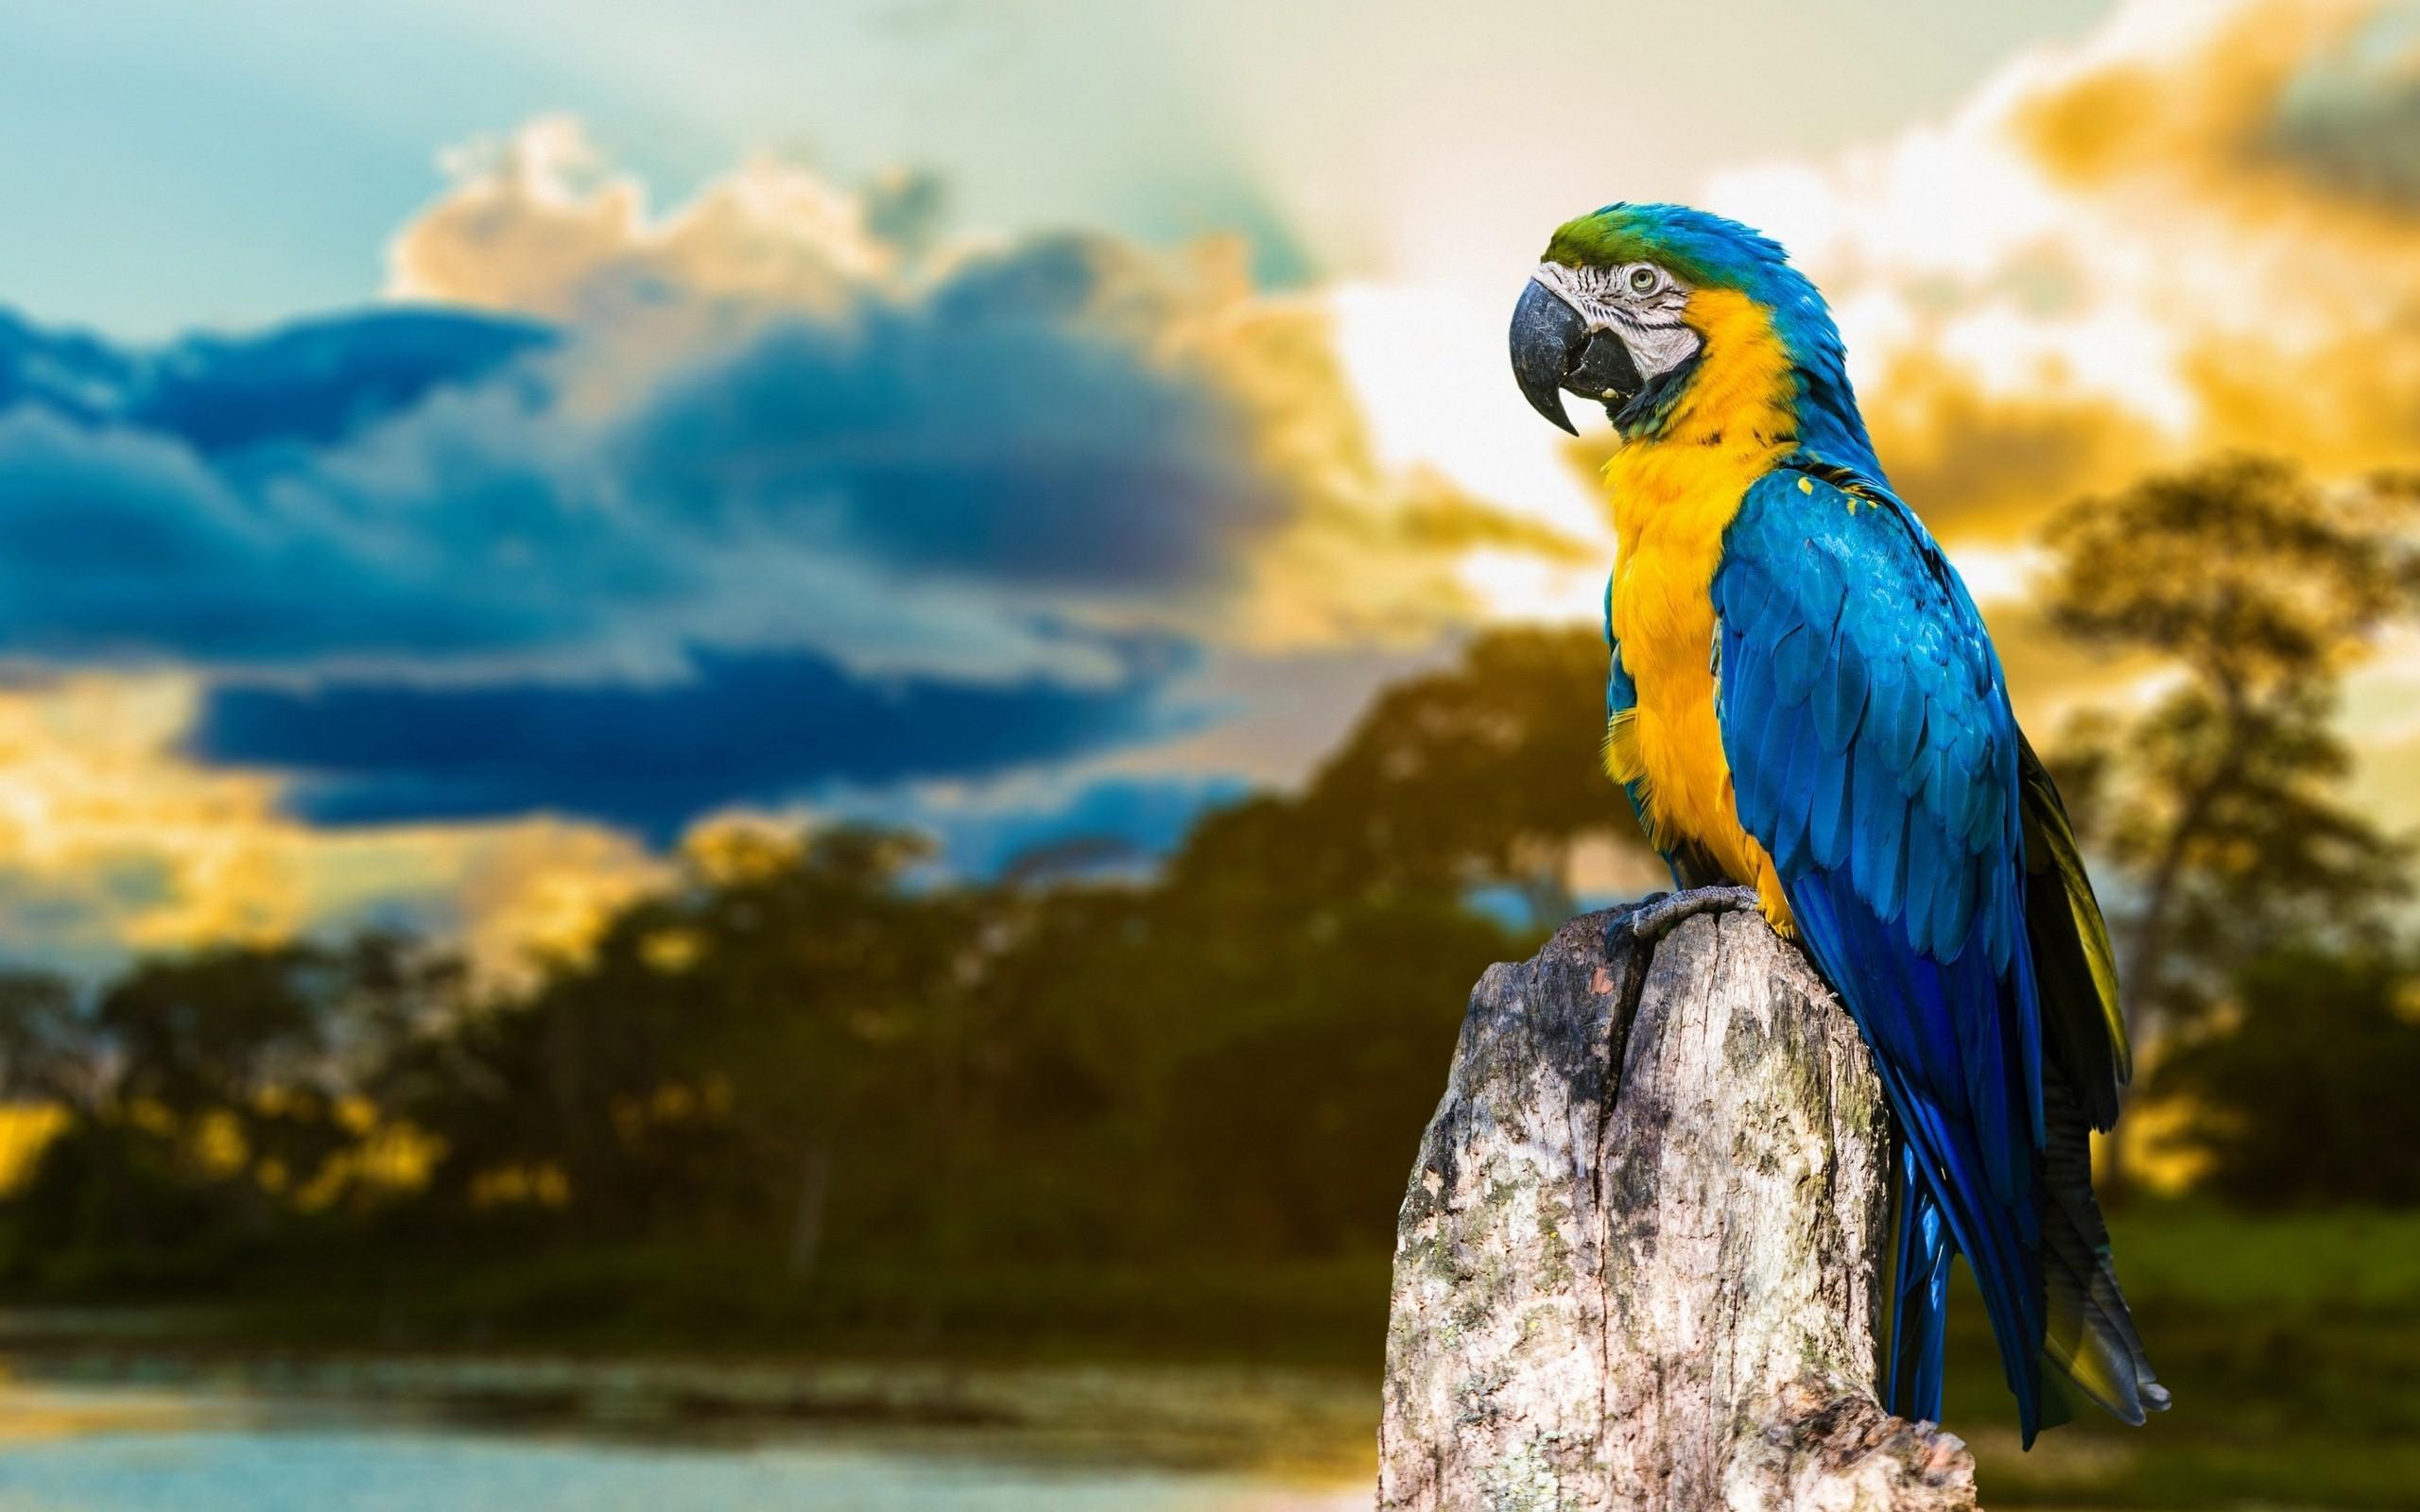 Macaw Parrot Wallpaper